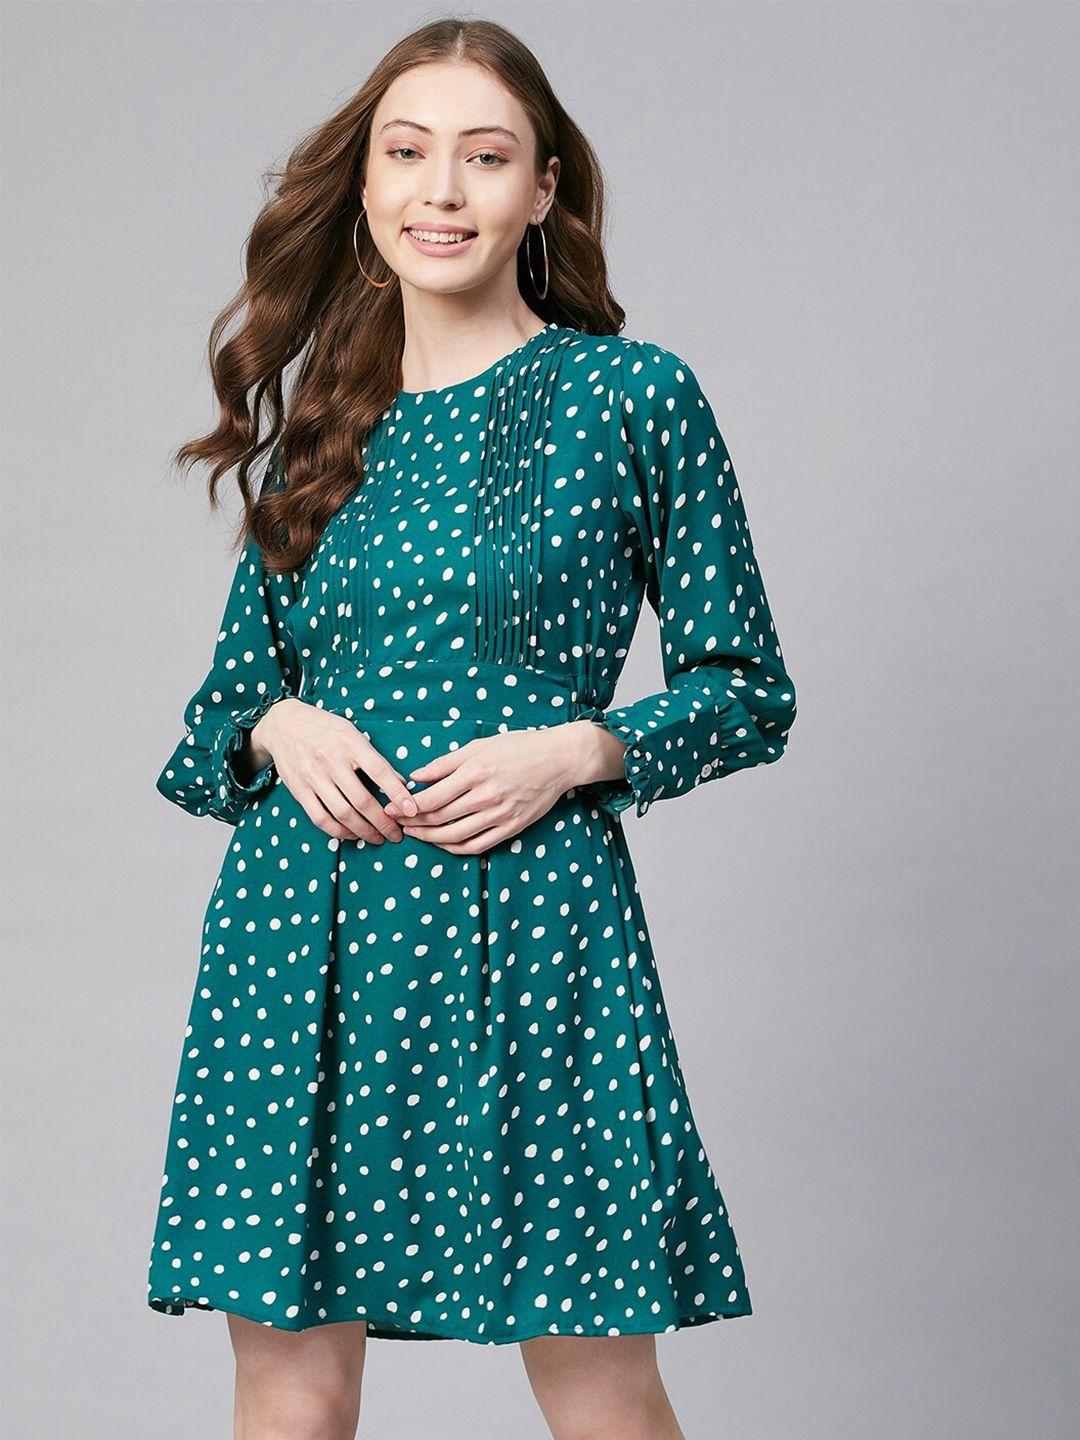 stylestone green polka dots dress